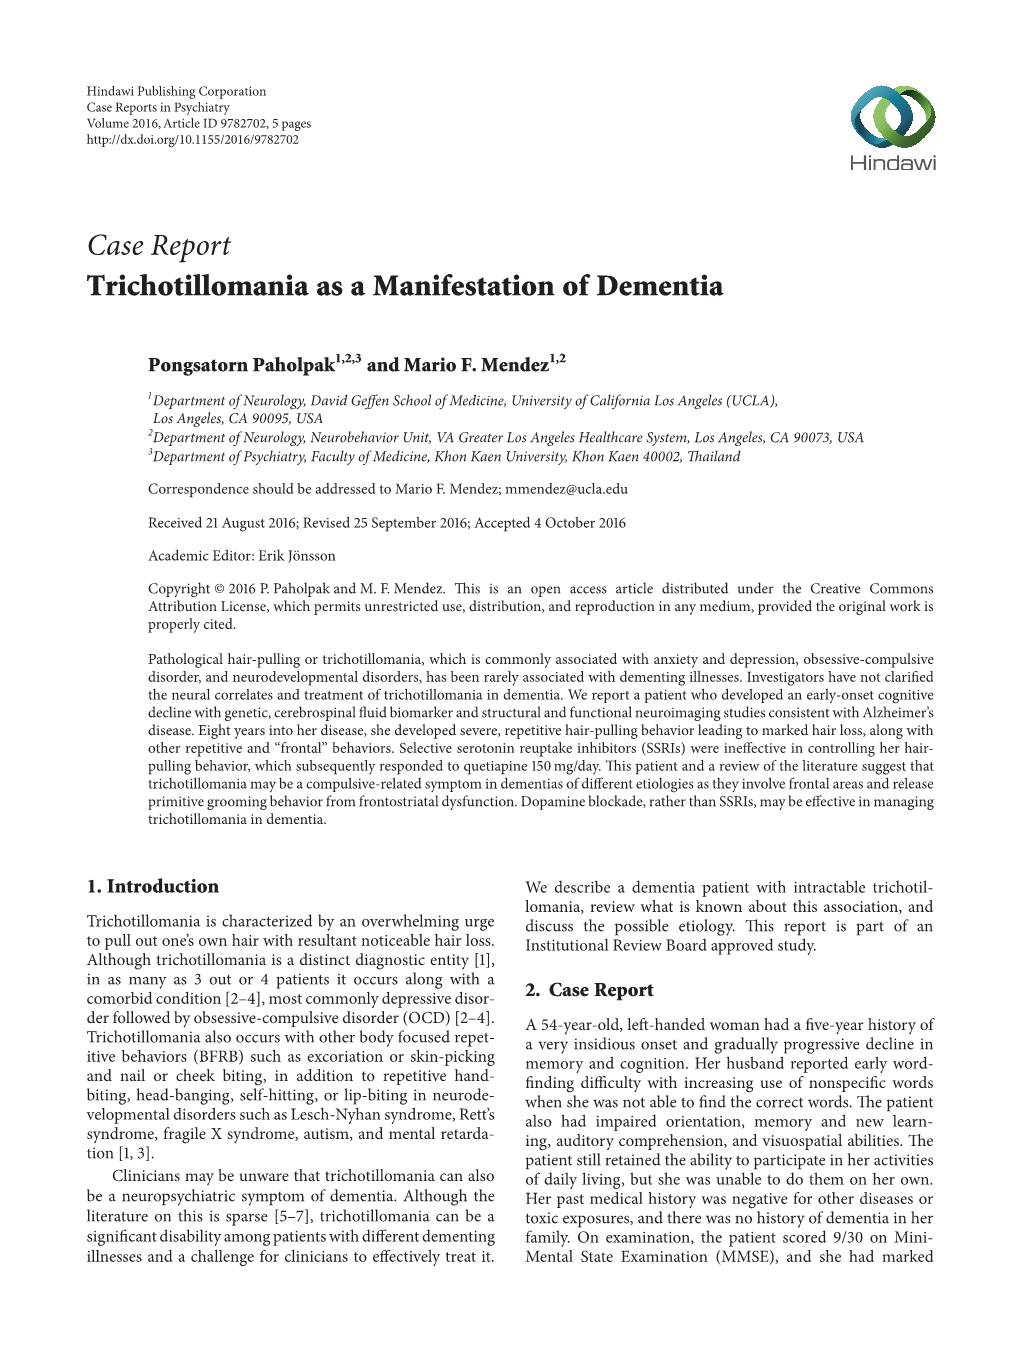 Case Report Trichotillomania As a Manifestation of Dementia